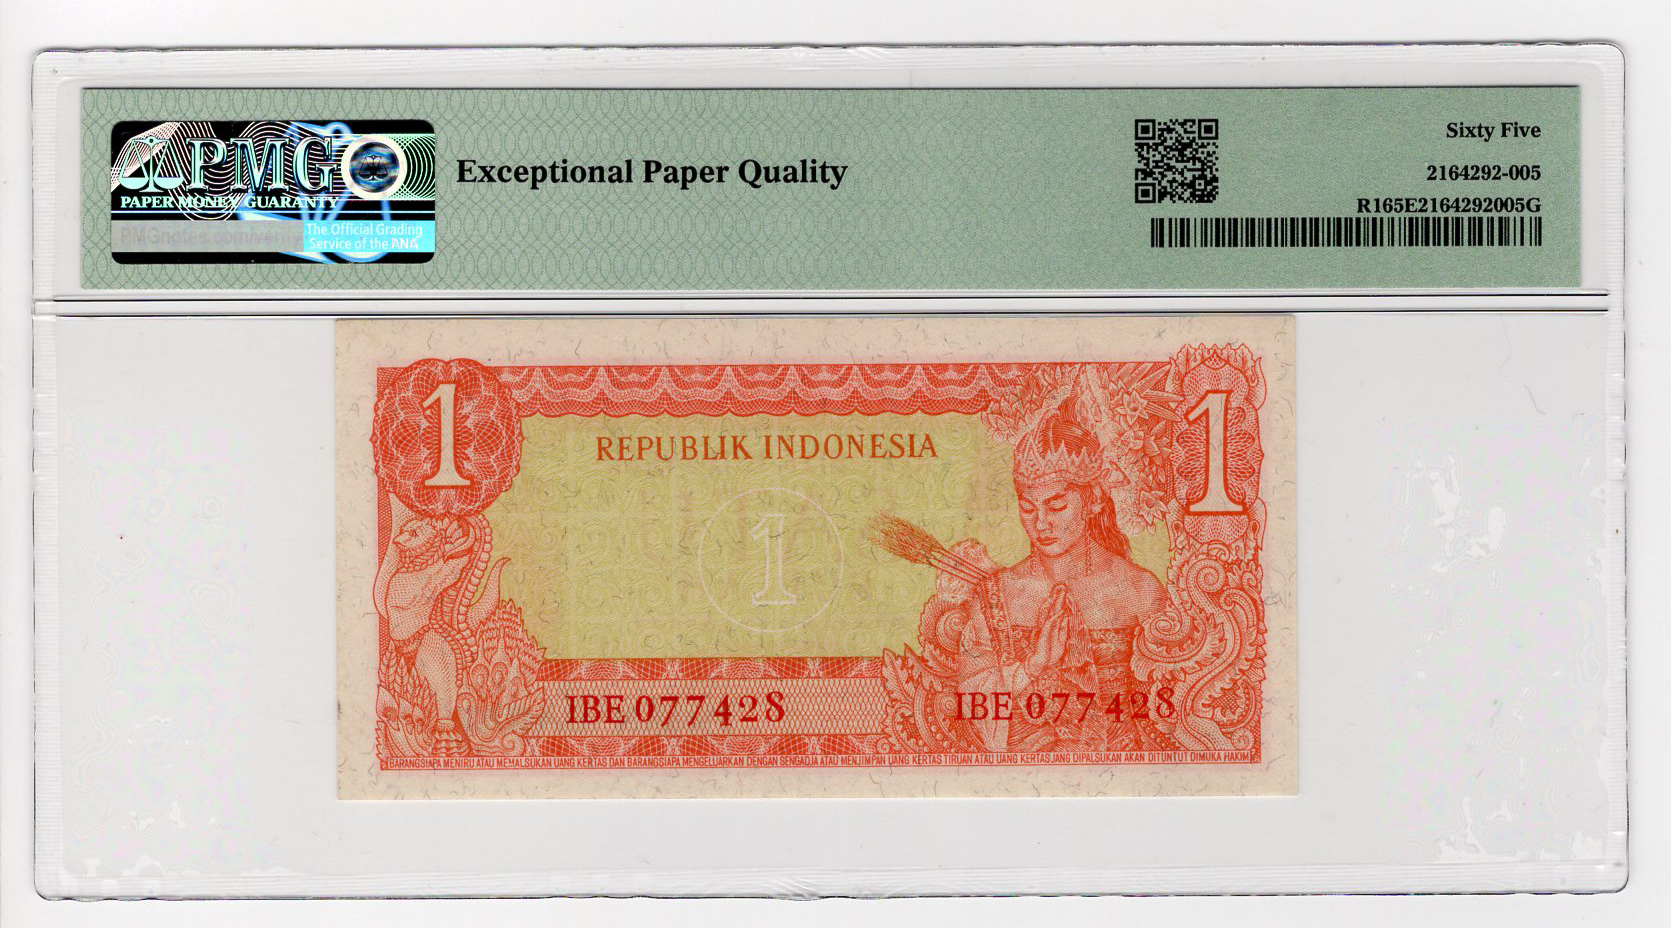 Indonesia 1 Rupiah dated 1960 (issued 1963), Republik Indonesia Irian Barat provisional issue, - Image 2 of 2